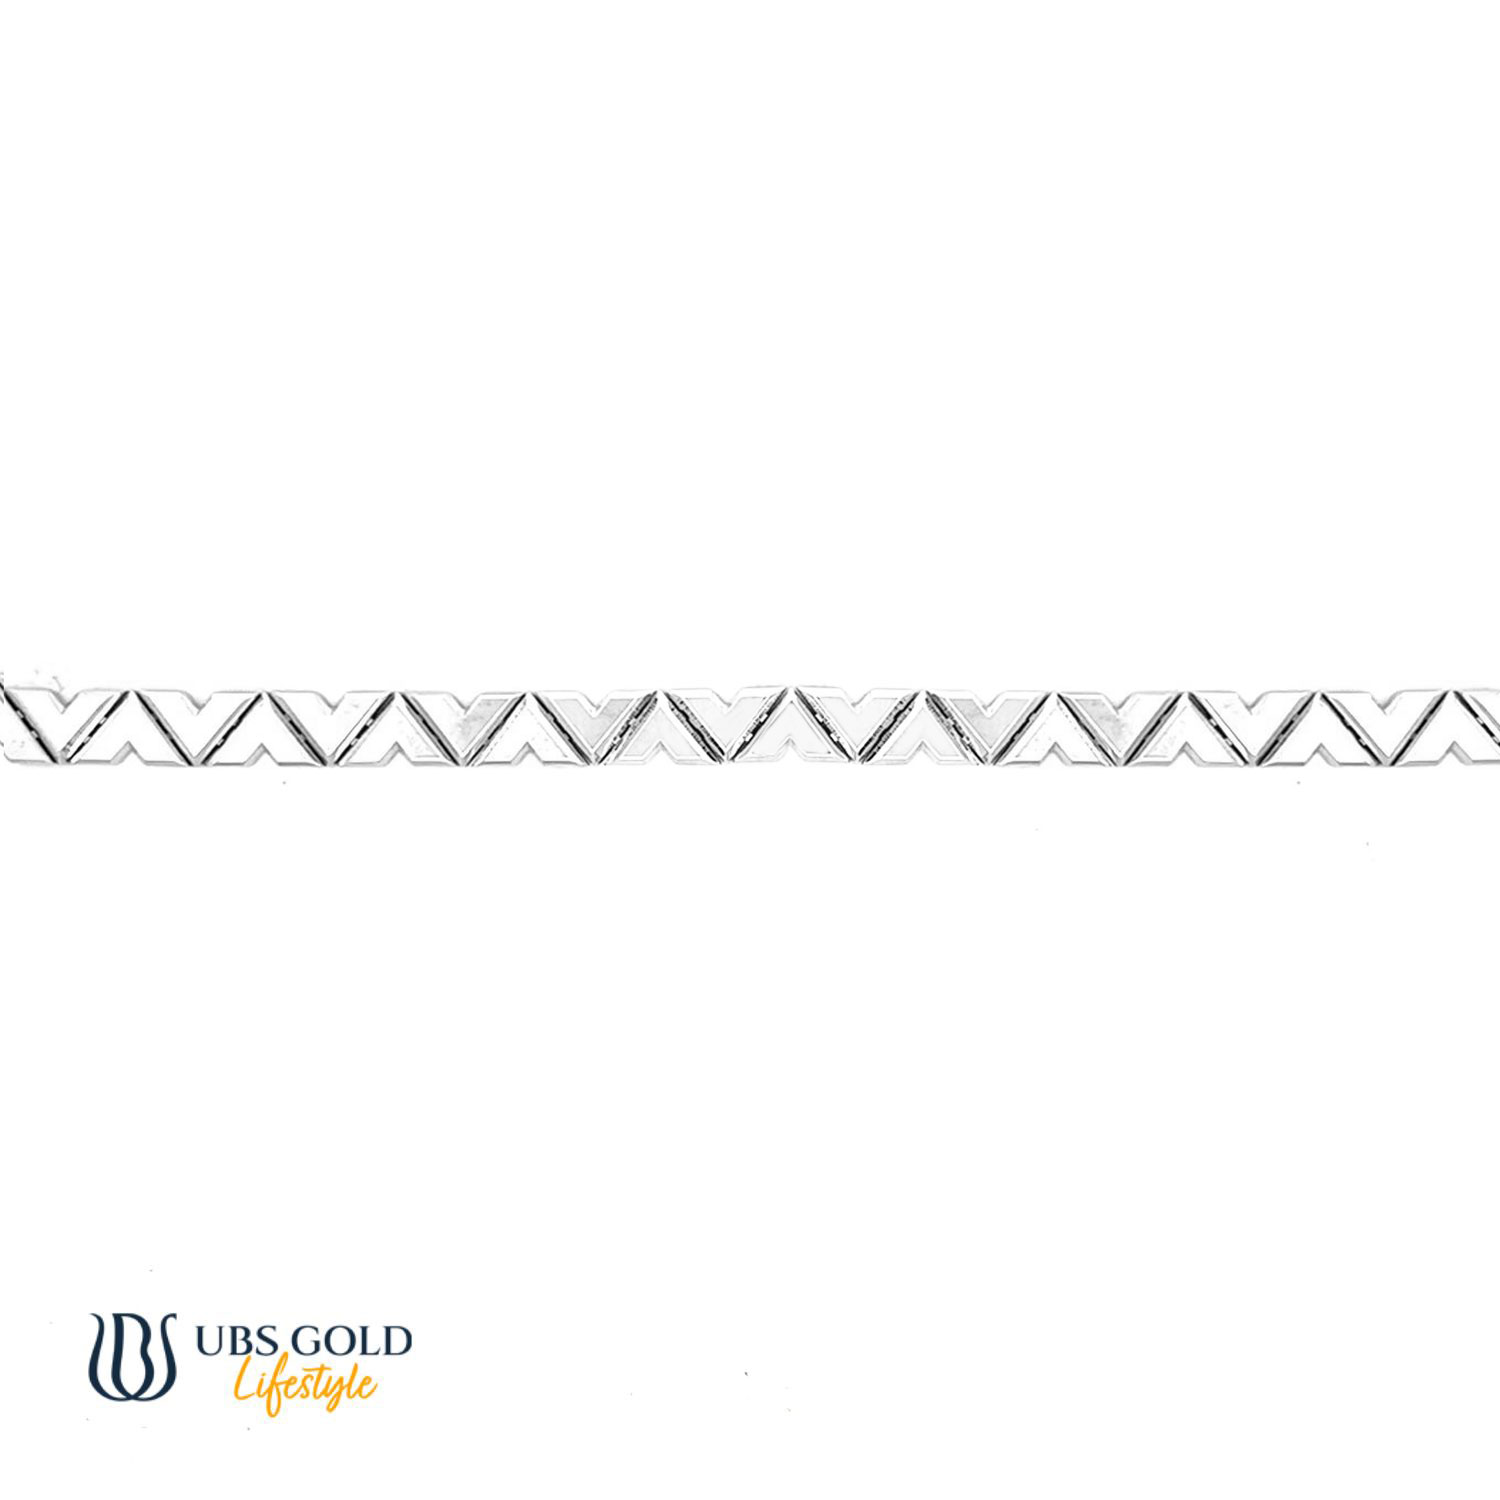 UBS Gold Gelang Emas - Vgh0005 - 17K